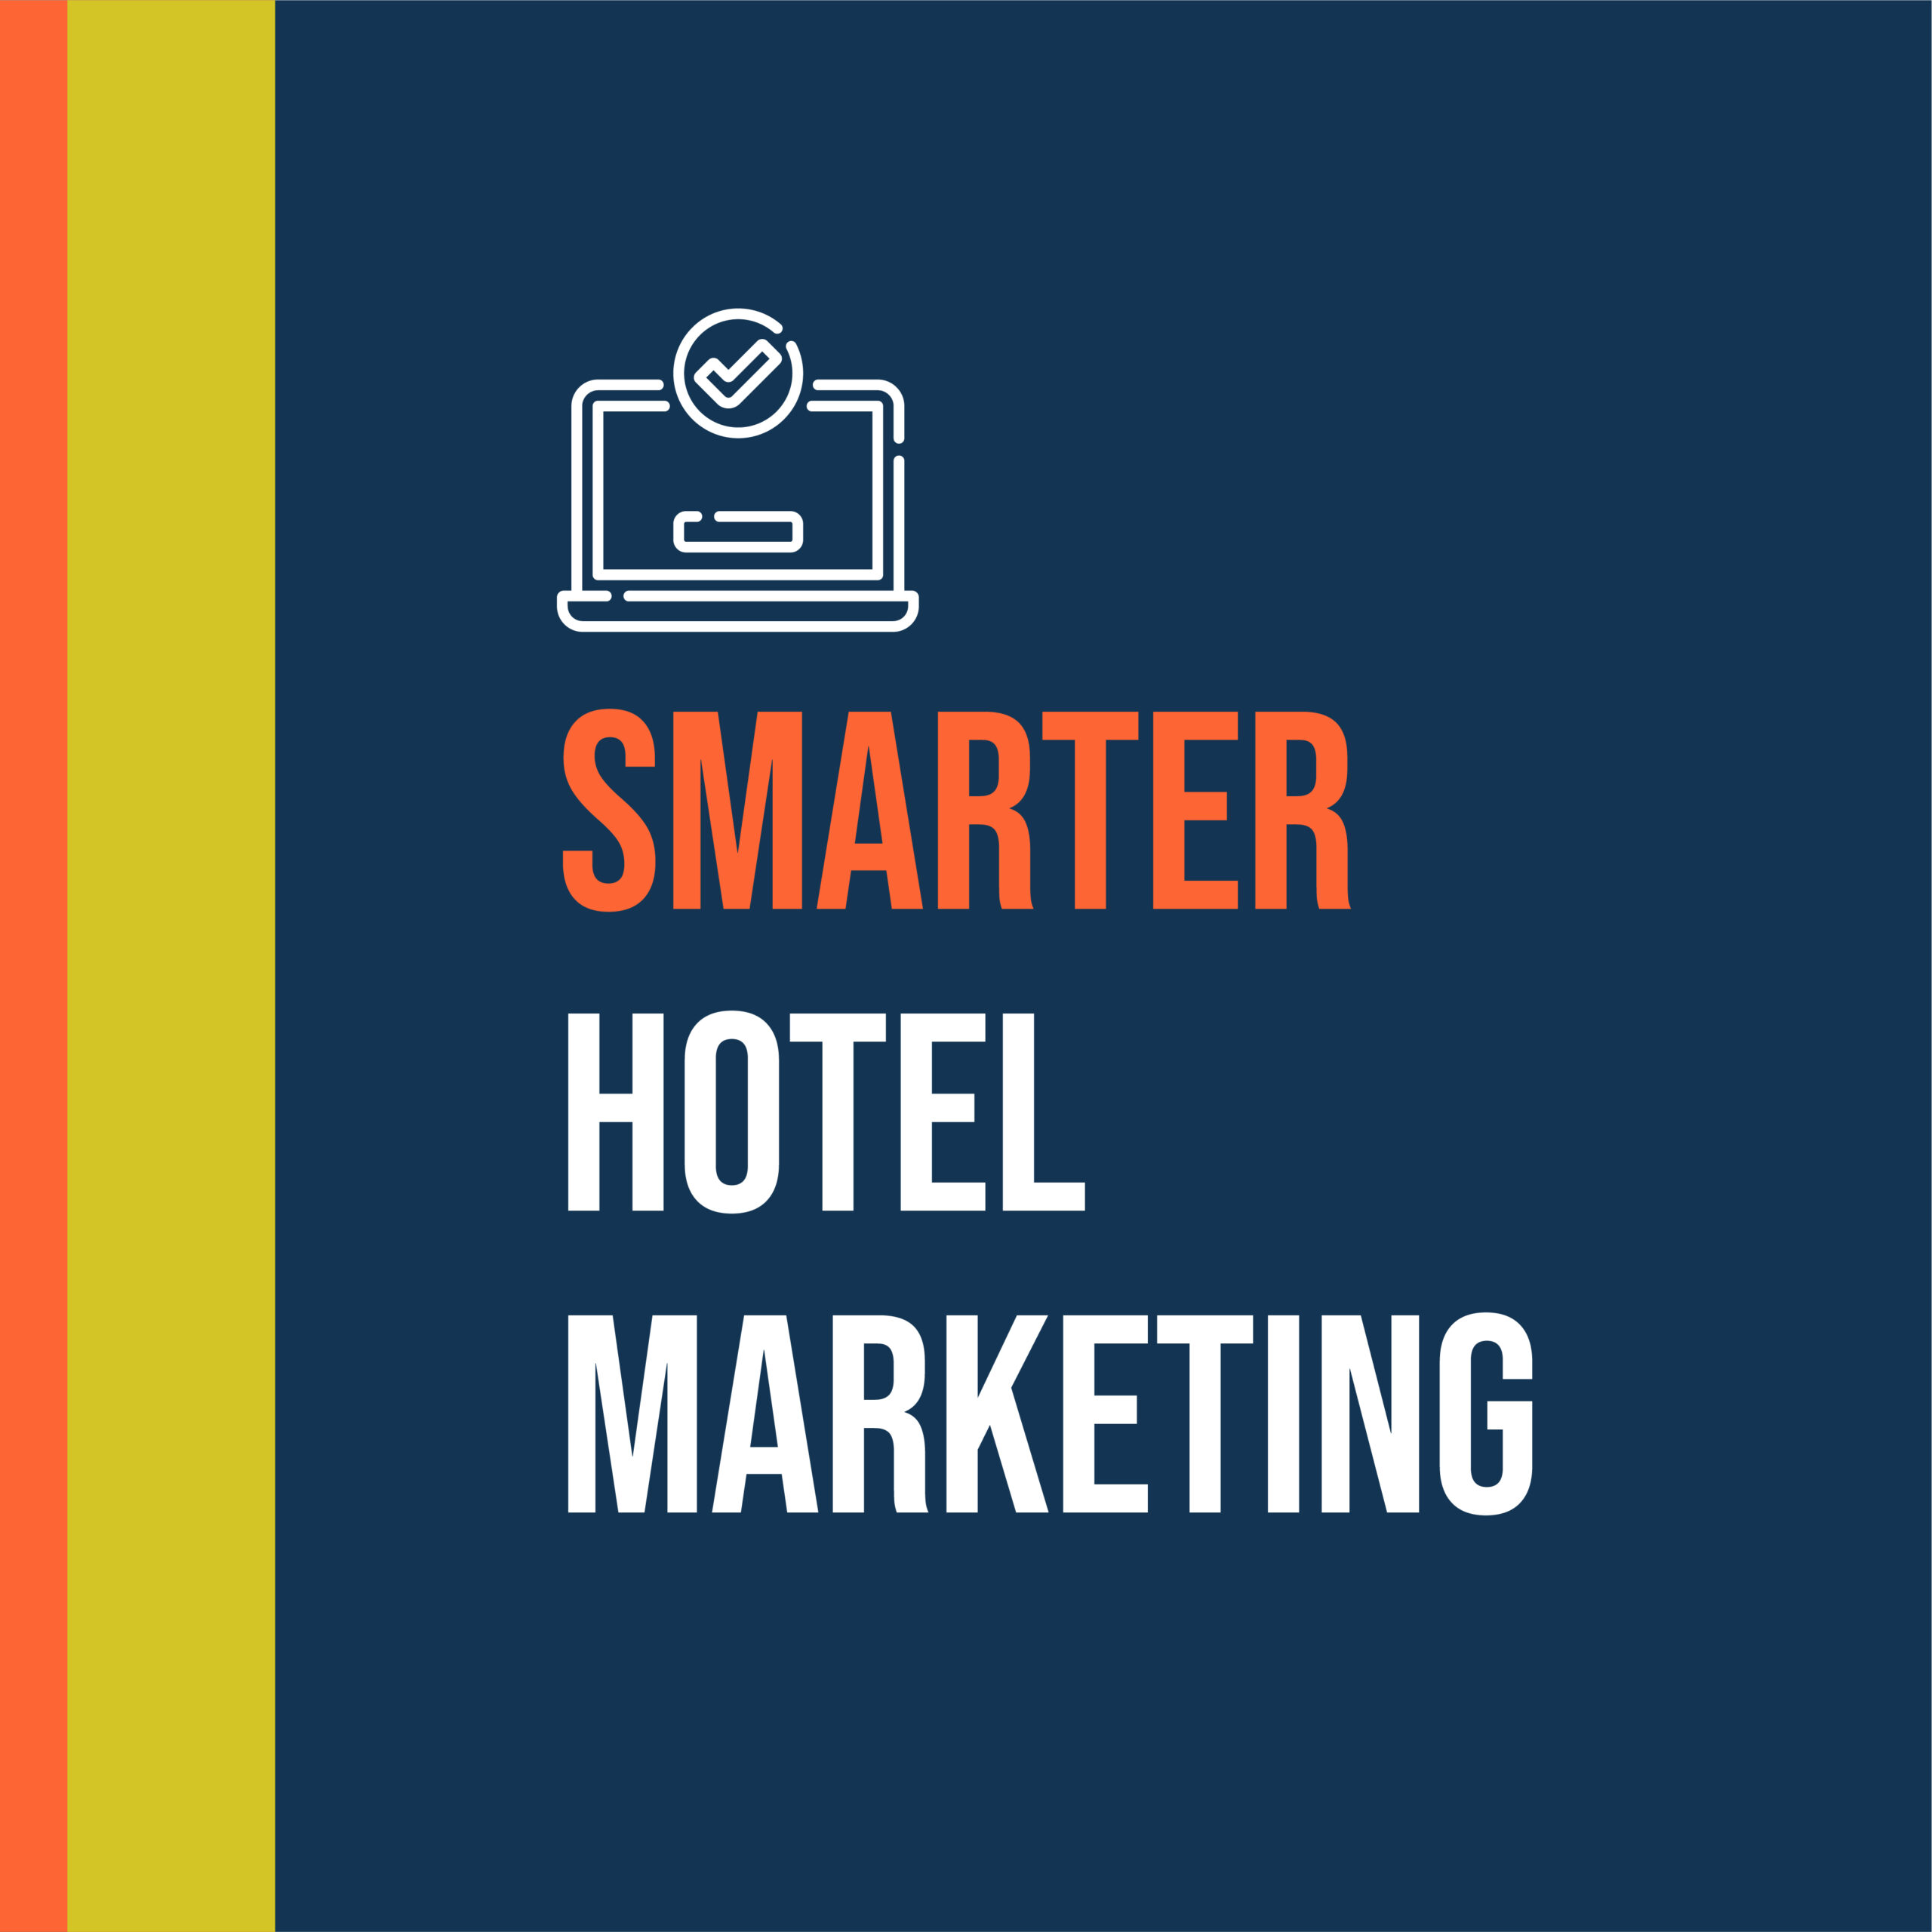 smarter hotel marketing